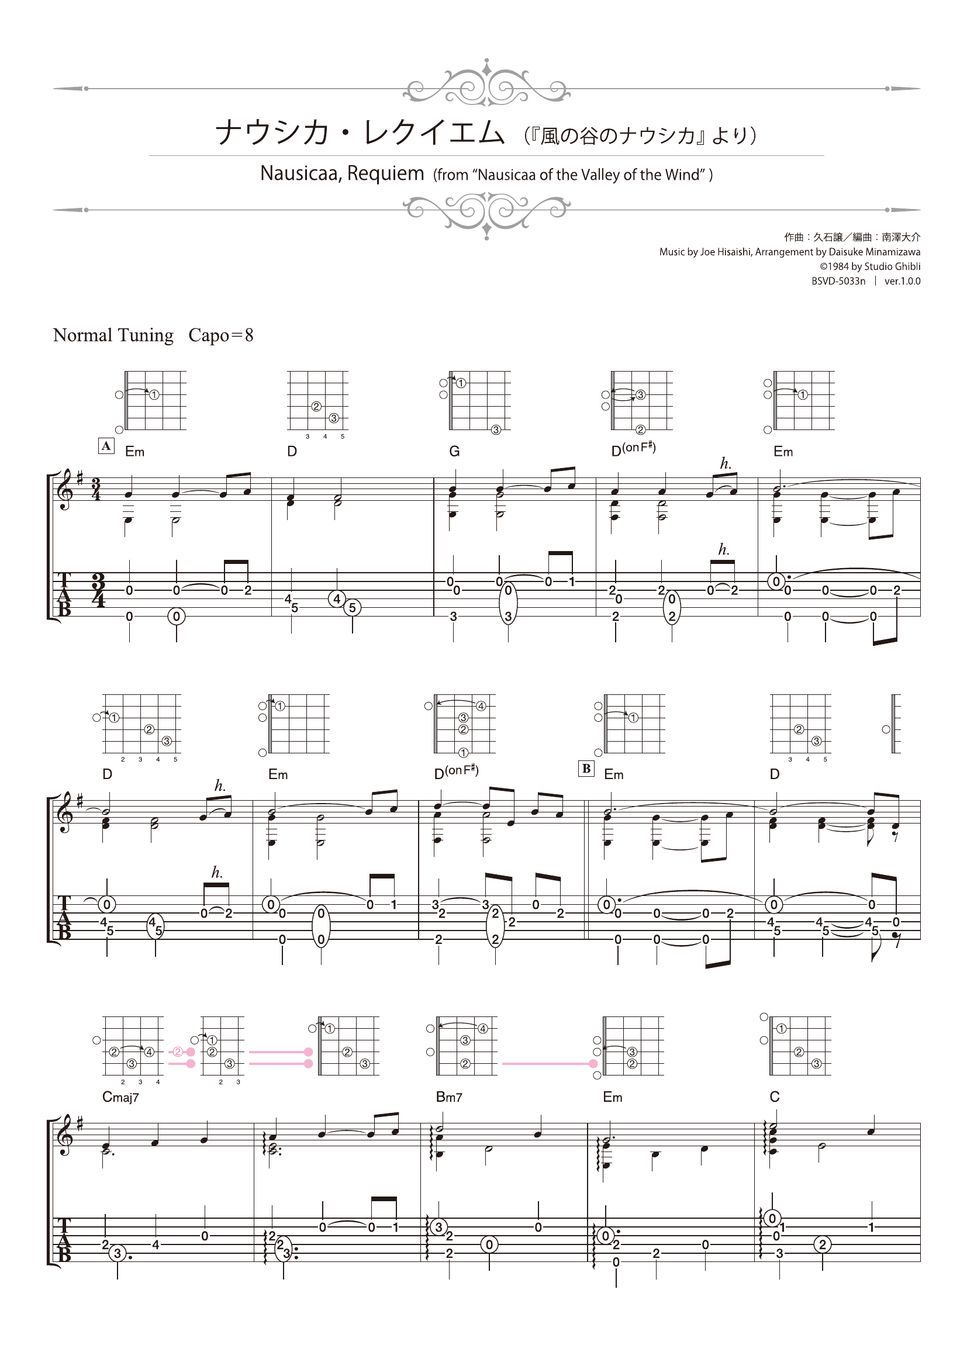 from "Nausicaa of the Valley of the Wind" - Nausicaa, Requiem (Solo Guitar) by Daisuke Minamizawa